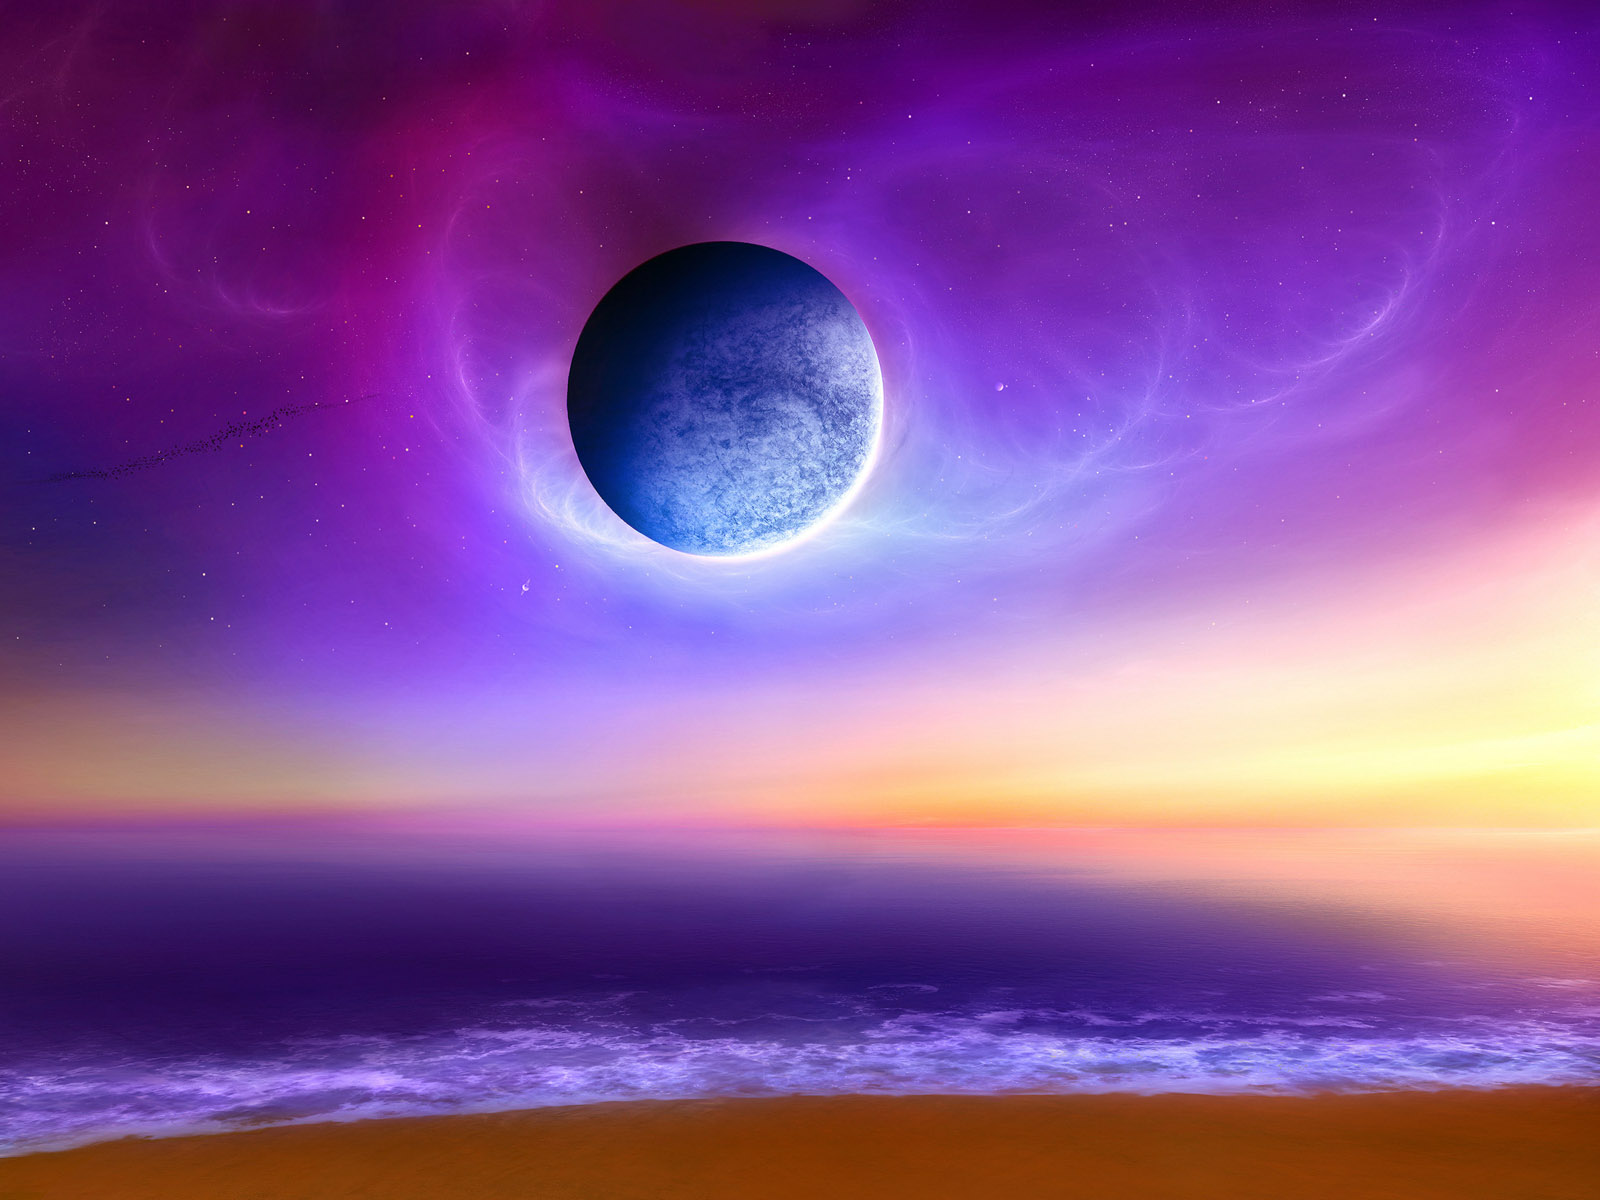 papel pintado colorido del espacio,cielo,naturaleza,atmósfera,horizonte,objeto astronómico